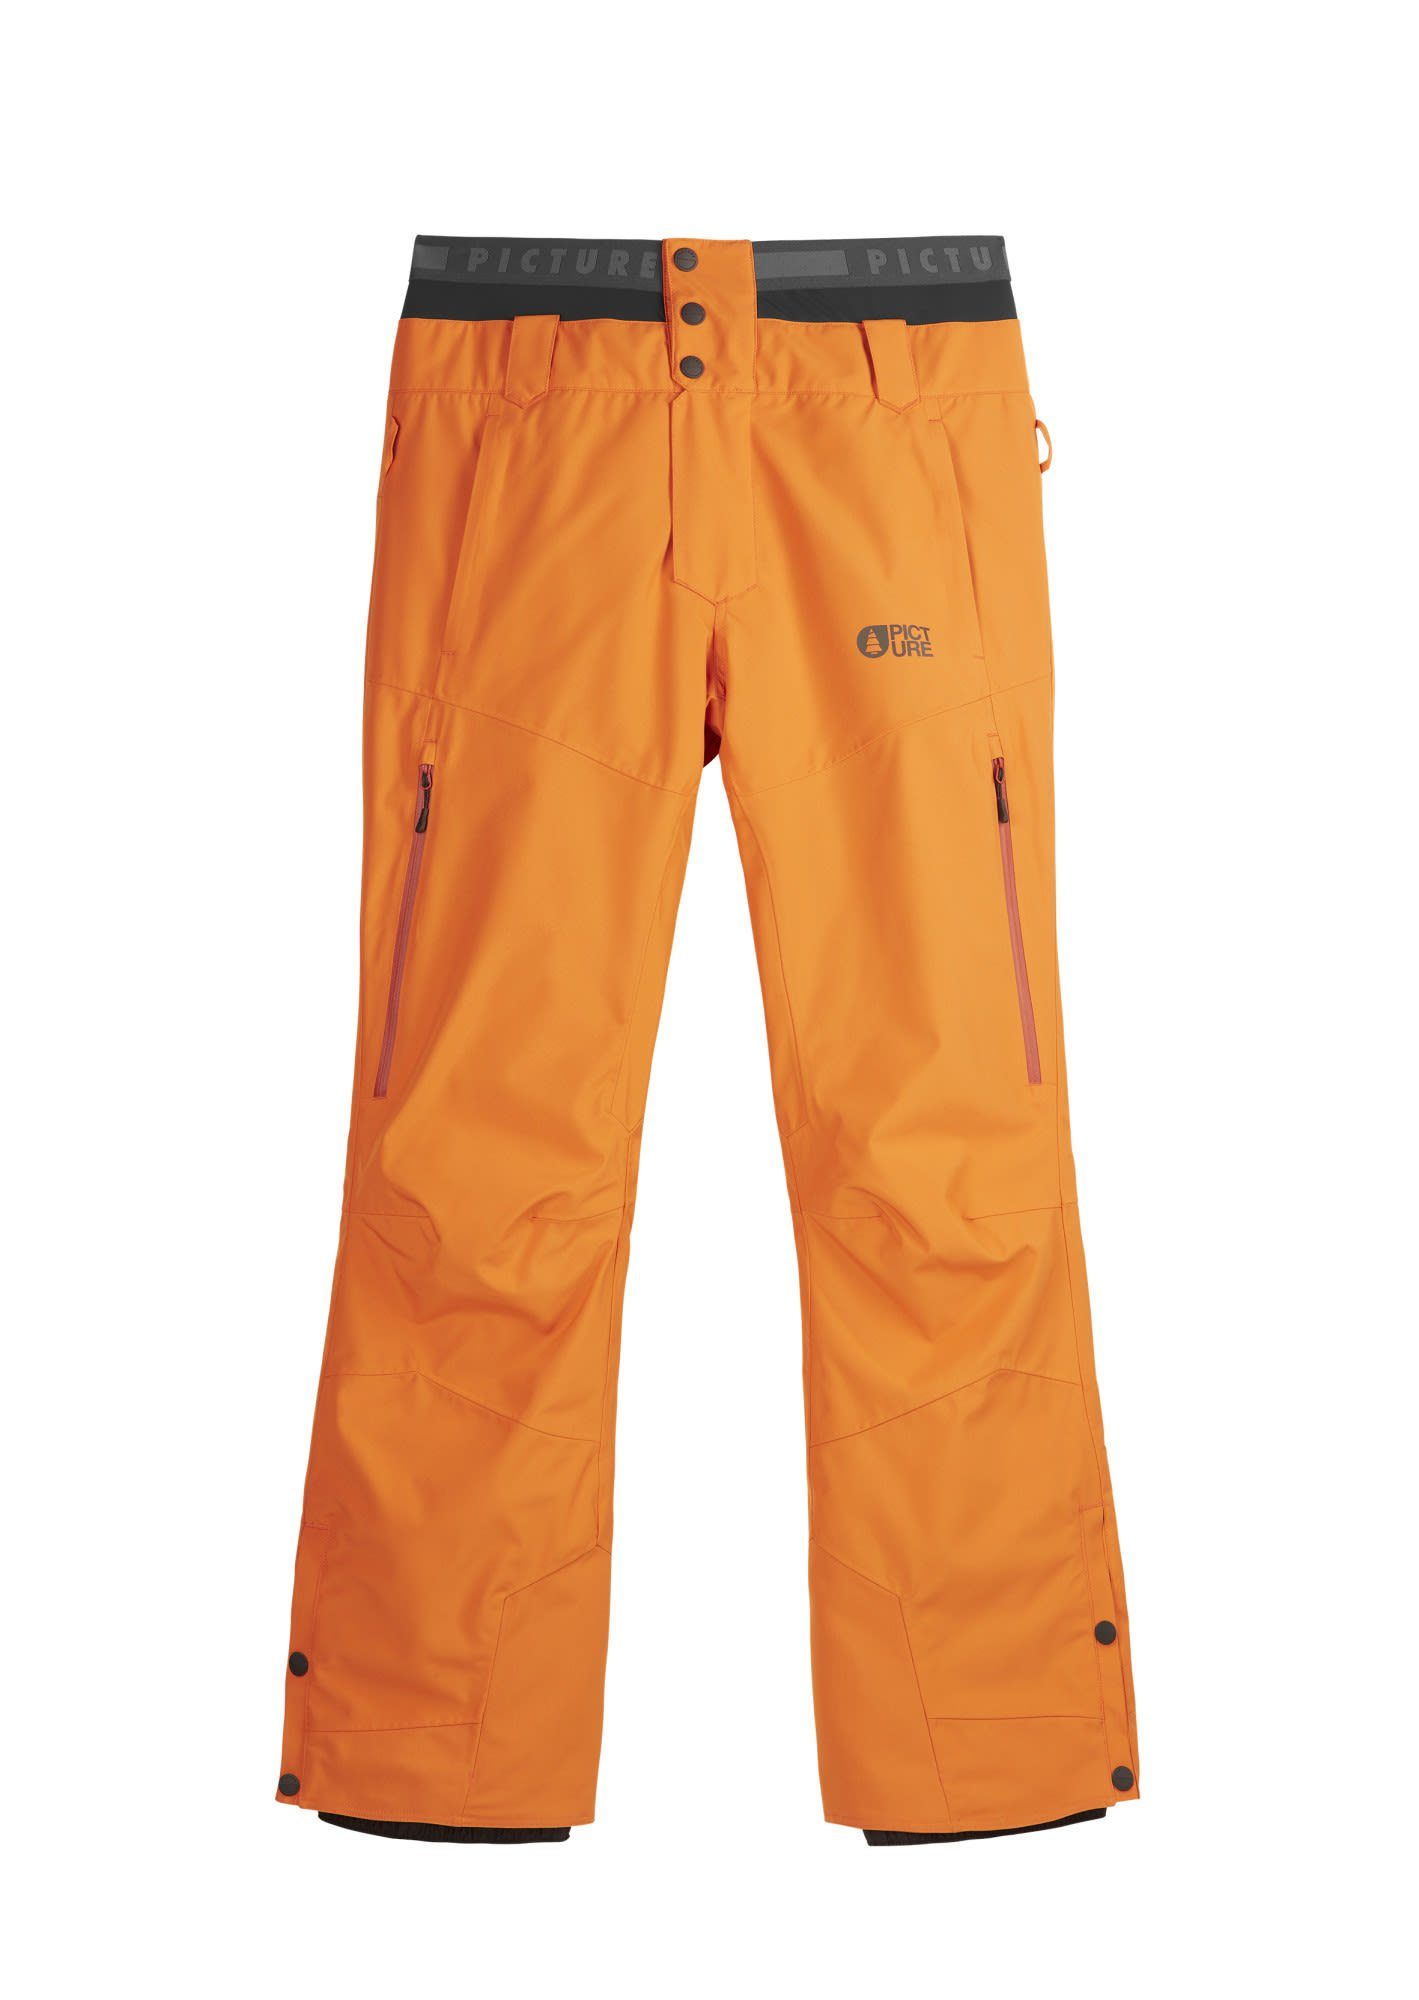 Pants orange Picture M Hose Herren Shorts Picture Object & Hose Picture